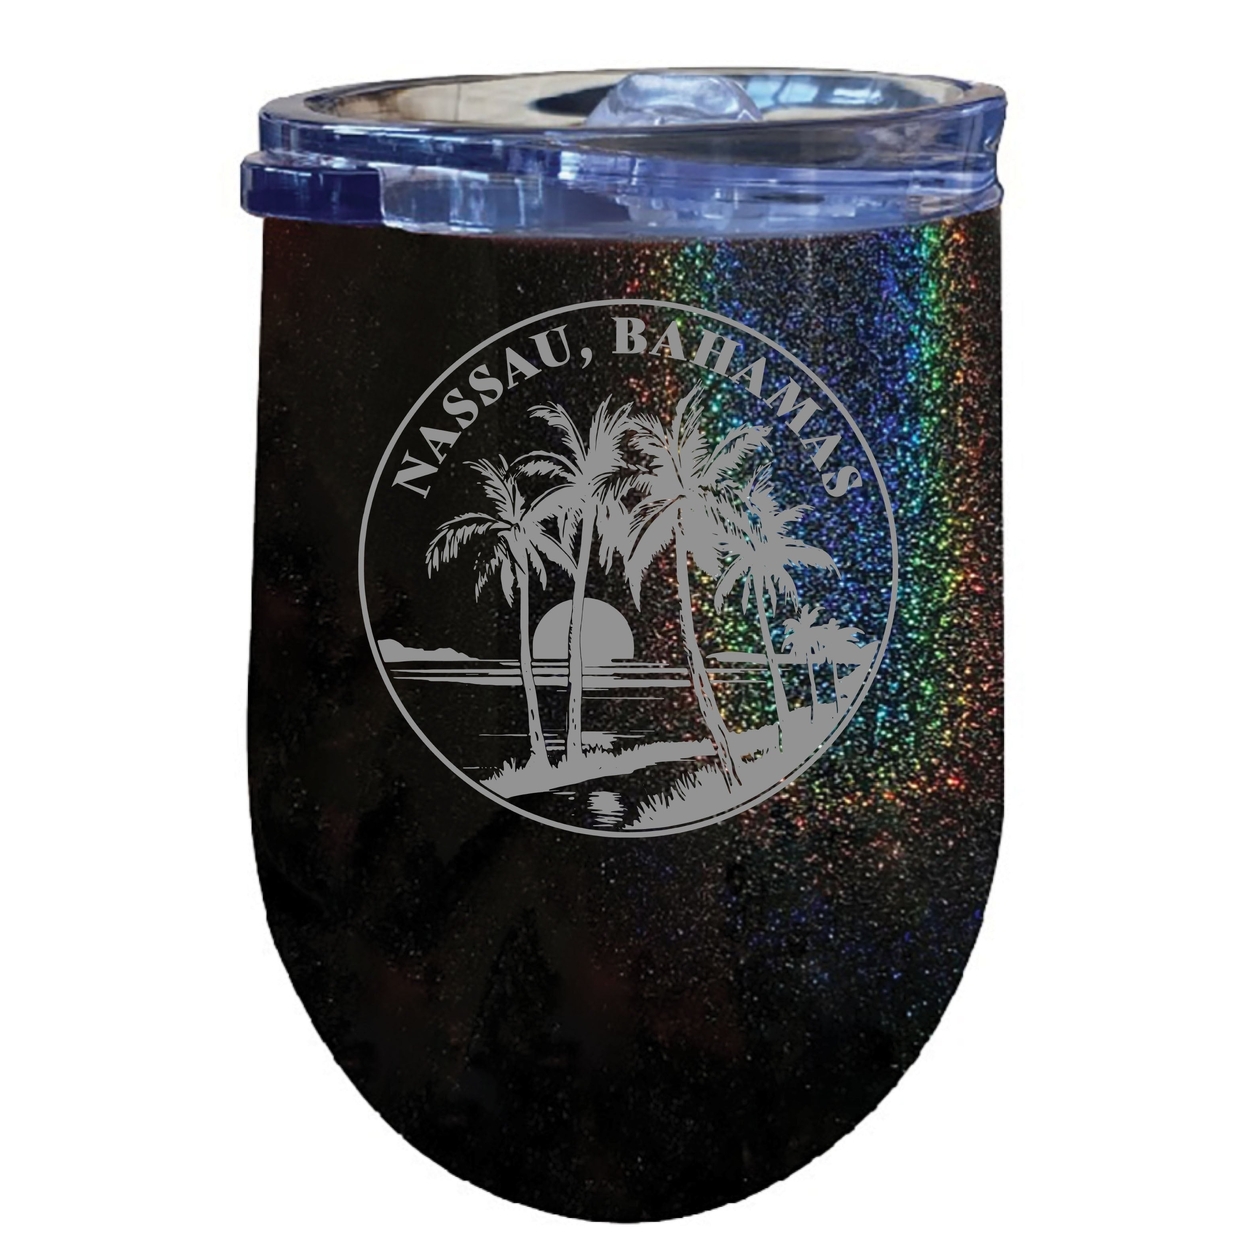 Nassau The Bahamas Souvenir 12 Oz Engraved Insulated Wine Stainless Steel Tumbler - Rainbow Glitter Gray,,Single Unit